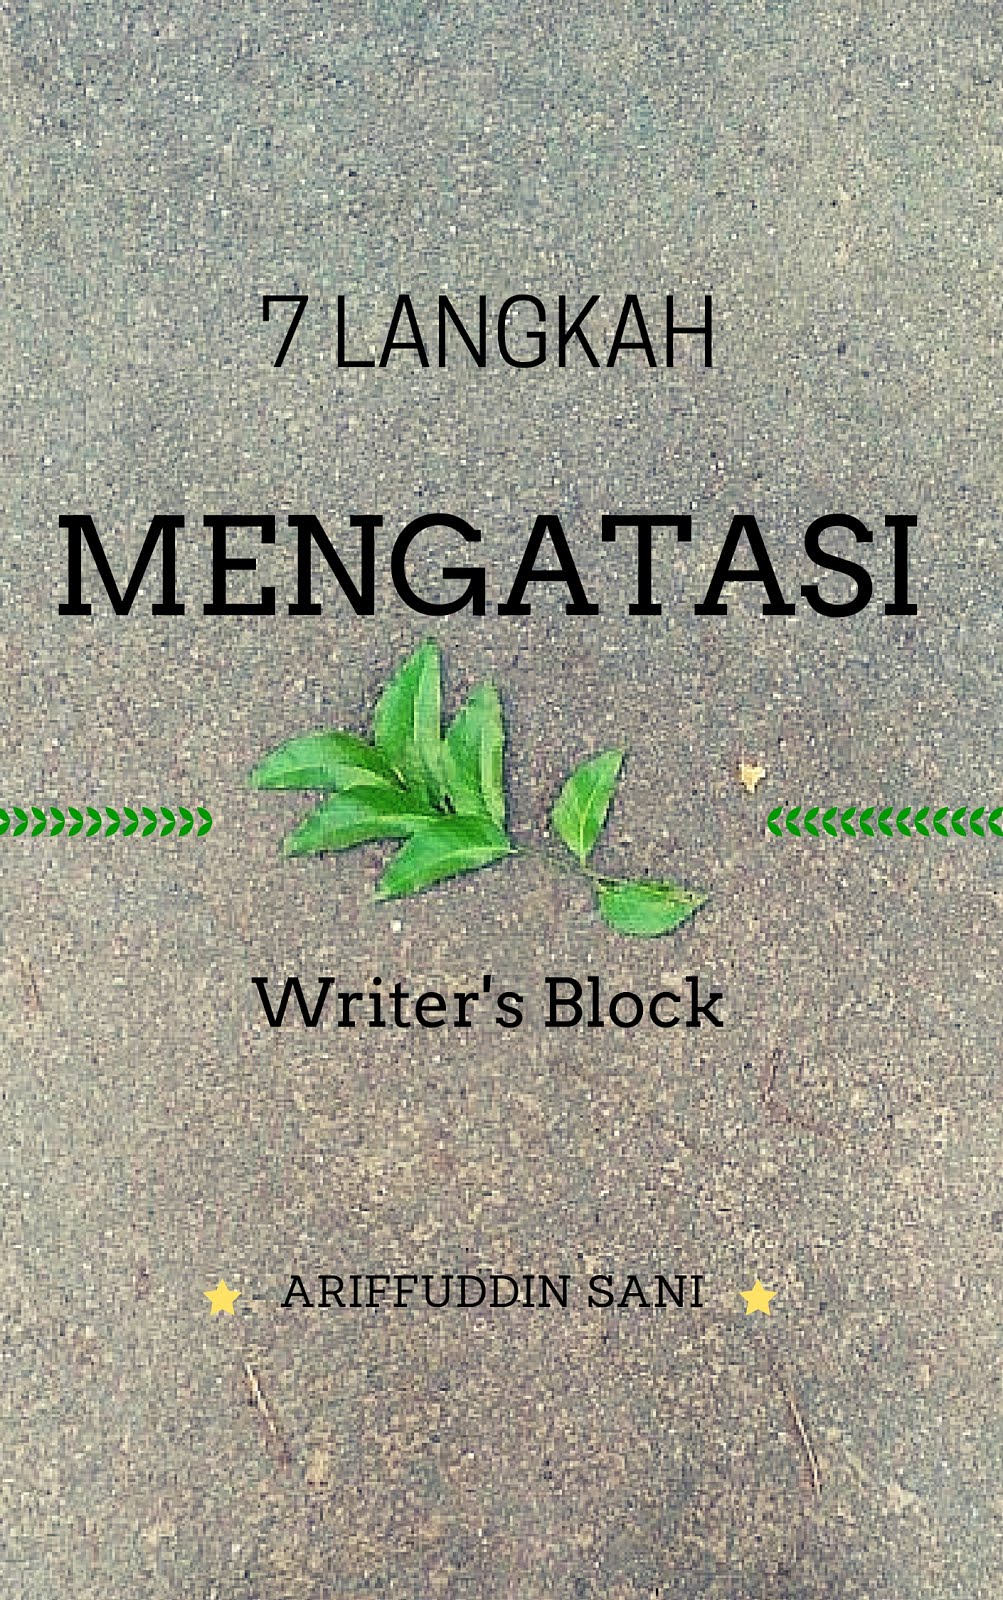 7 Langkah Mengatasi Writer's Block